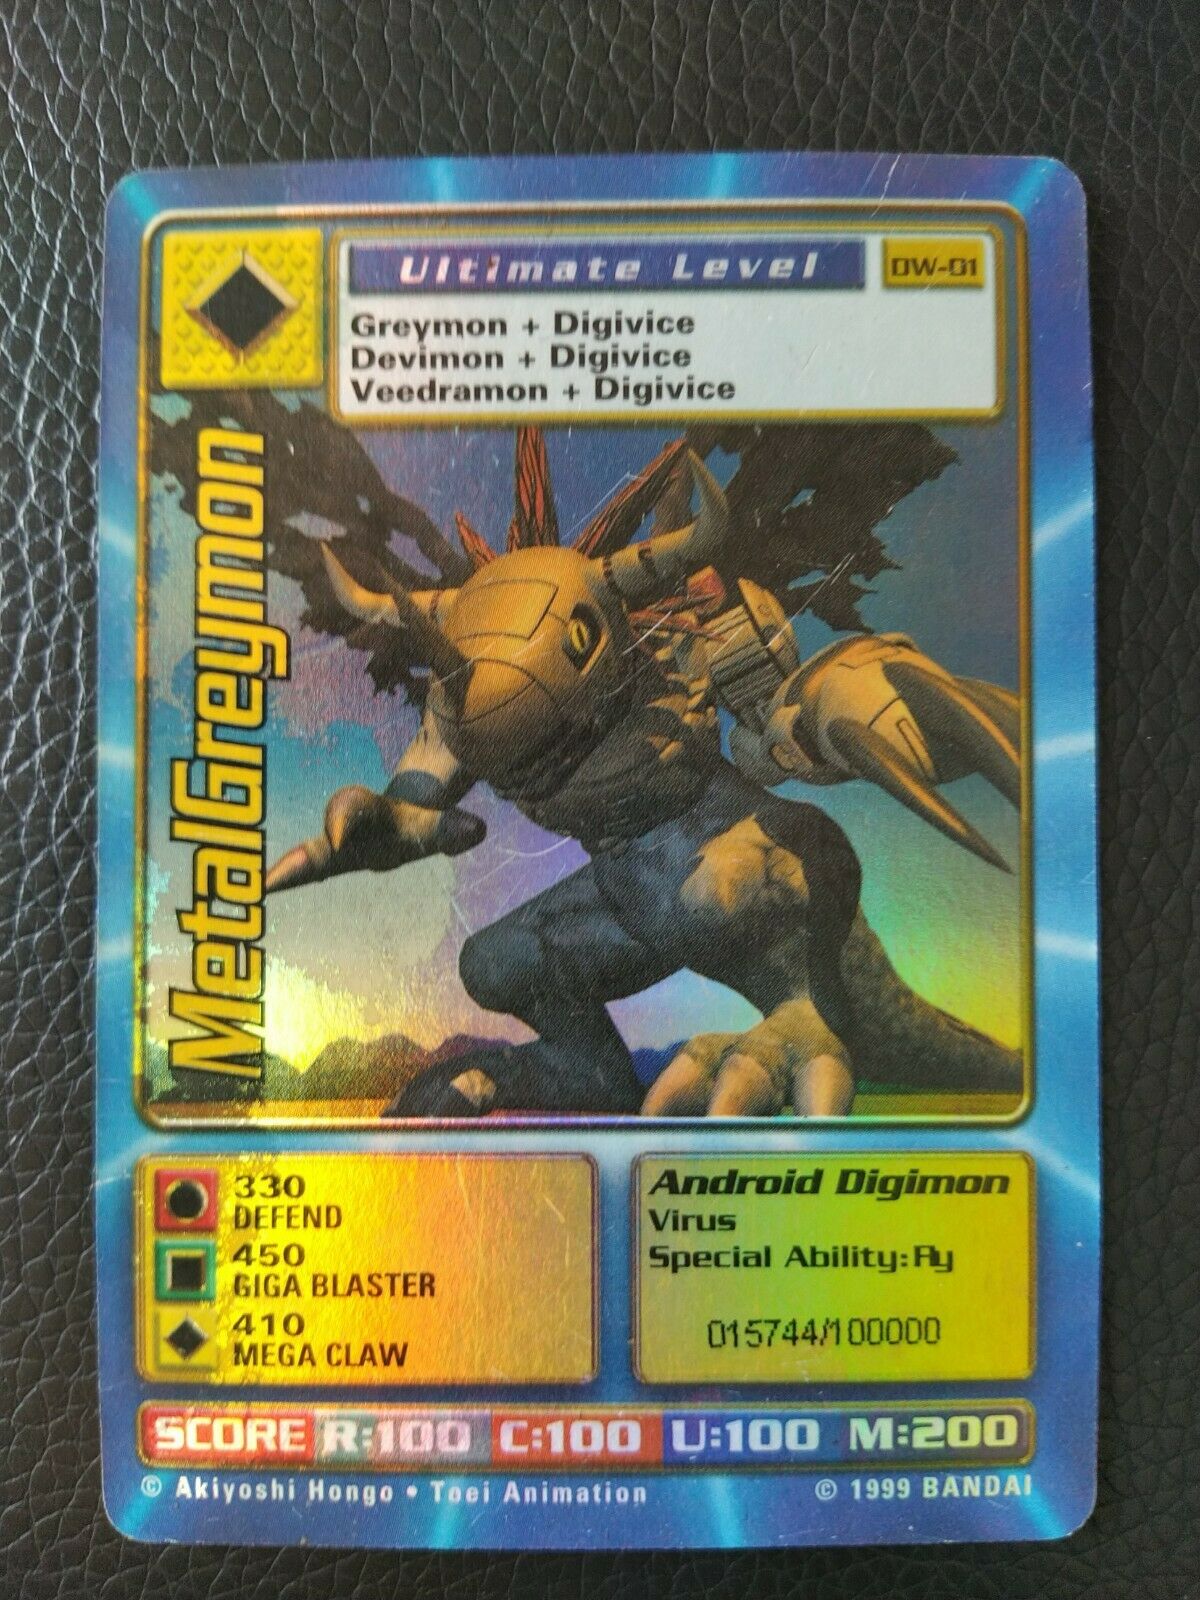 Digimon World PlayStation Promo DW-01 MetalGreymon - number 015744 / 100,000